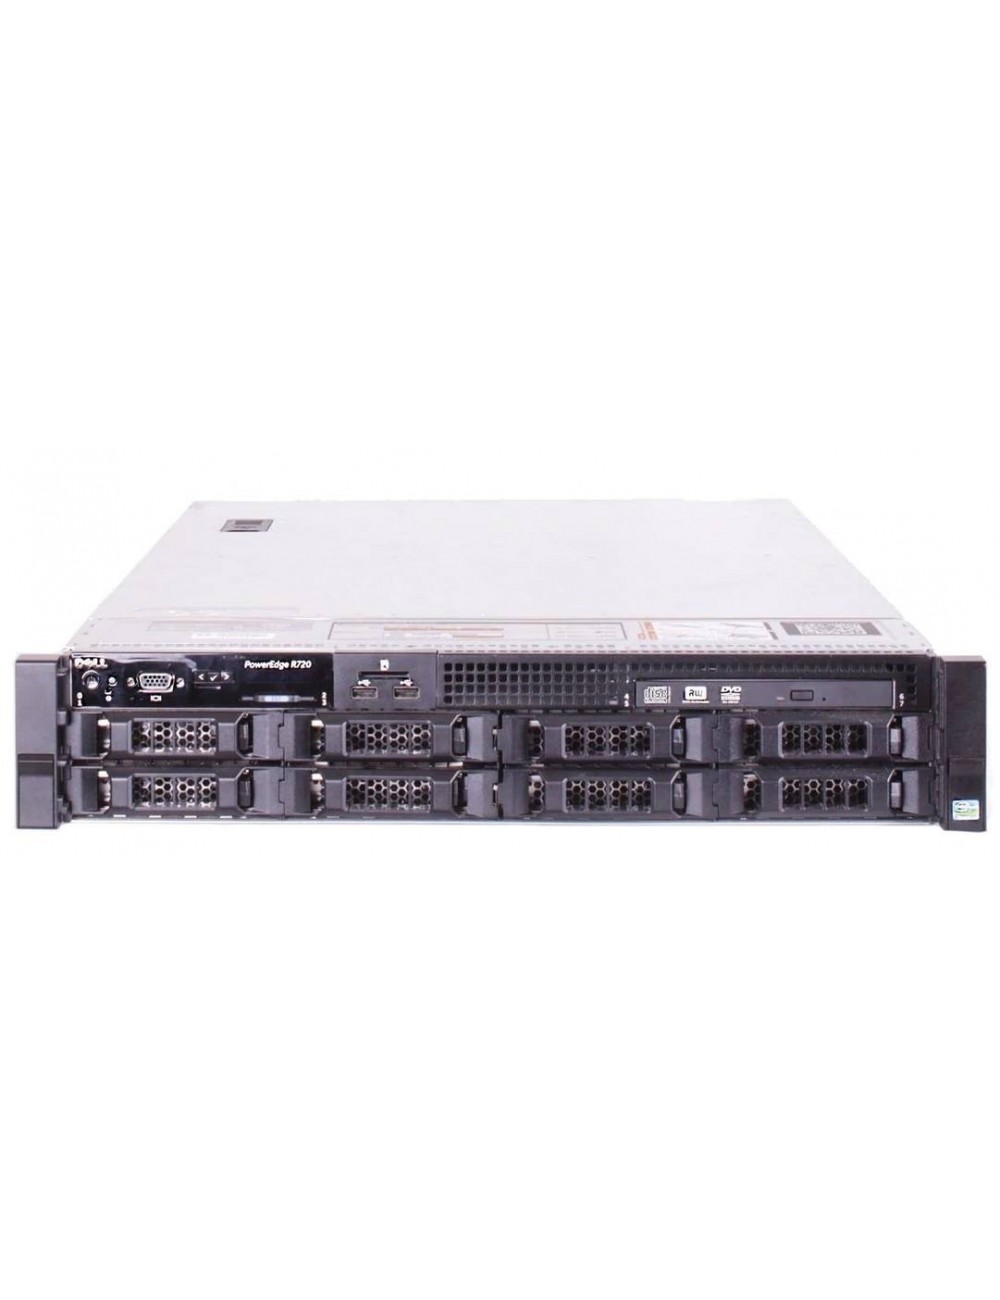 Dell PowerEdge R720 19" 2U 8x LFF, 2x E5-2650 V2 8C, 32GB RAM, PERC H710 512MB, NO HDD, 2x 750W PS